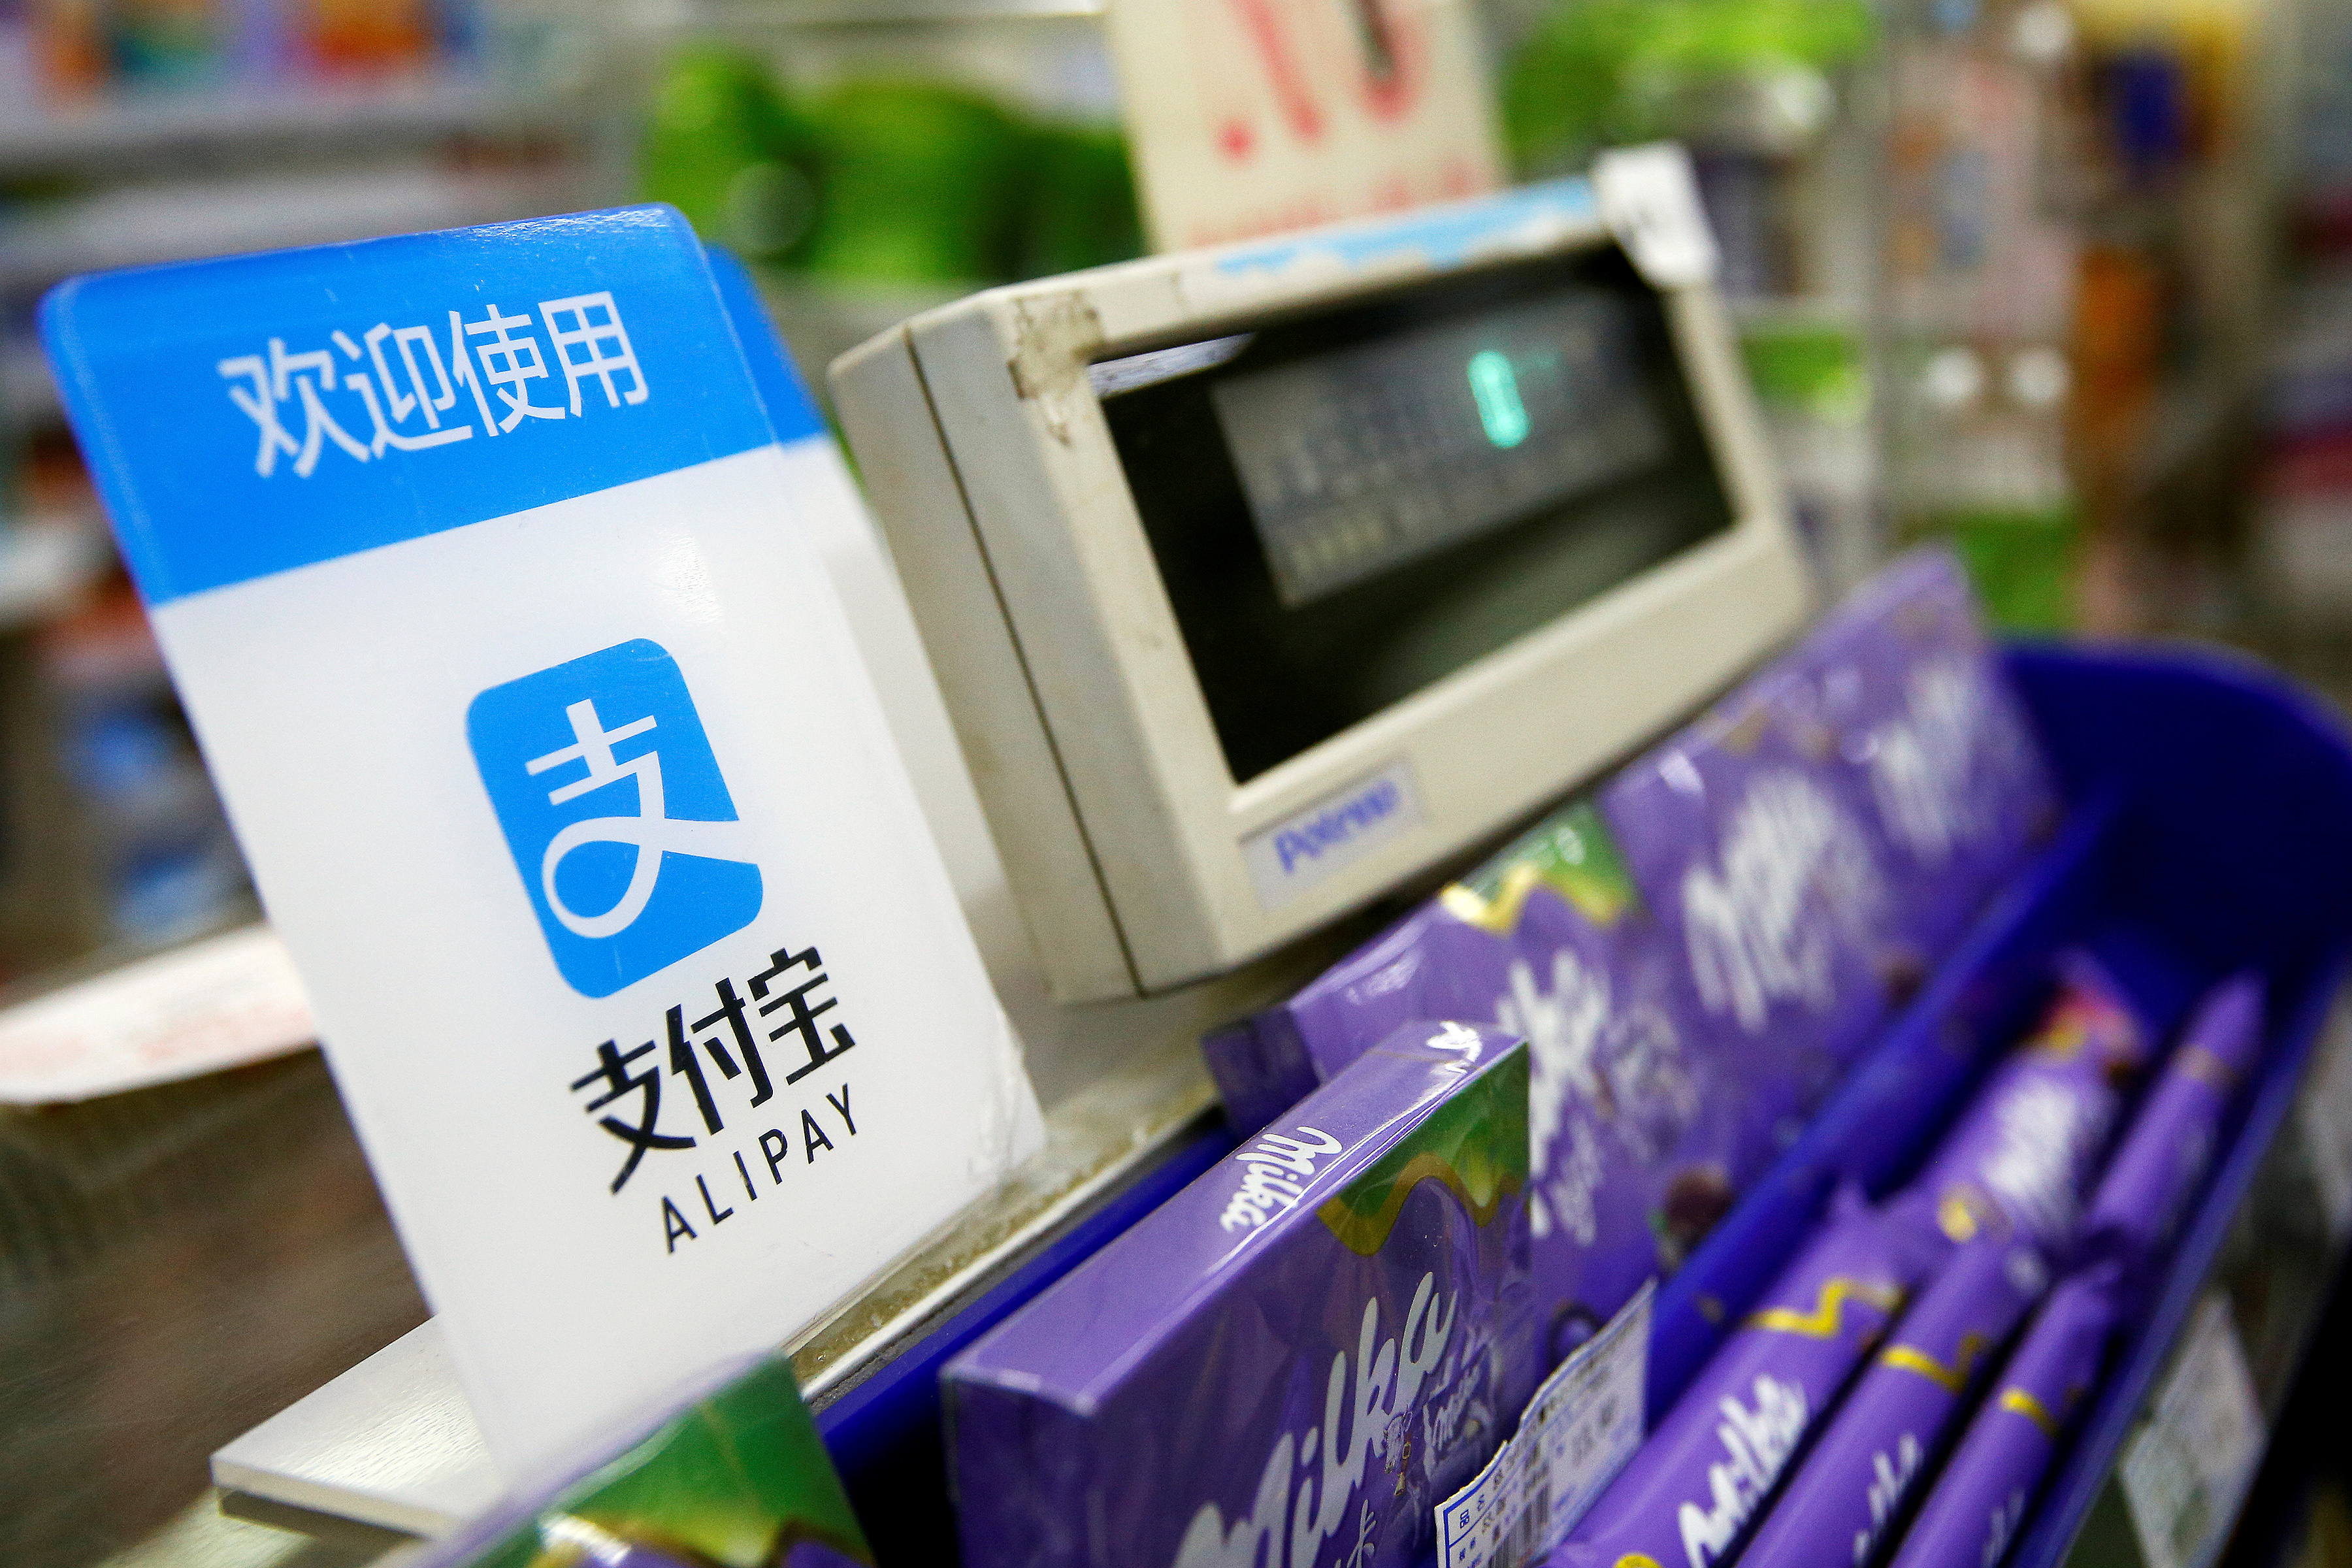 An Alipay logo is seen at a cashier in Shanghai